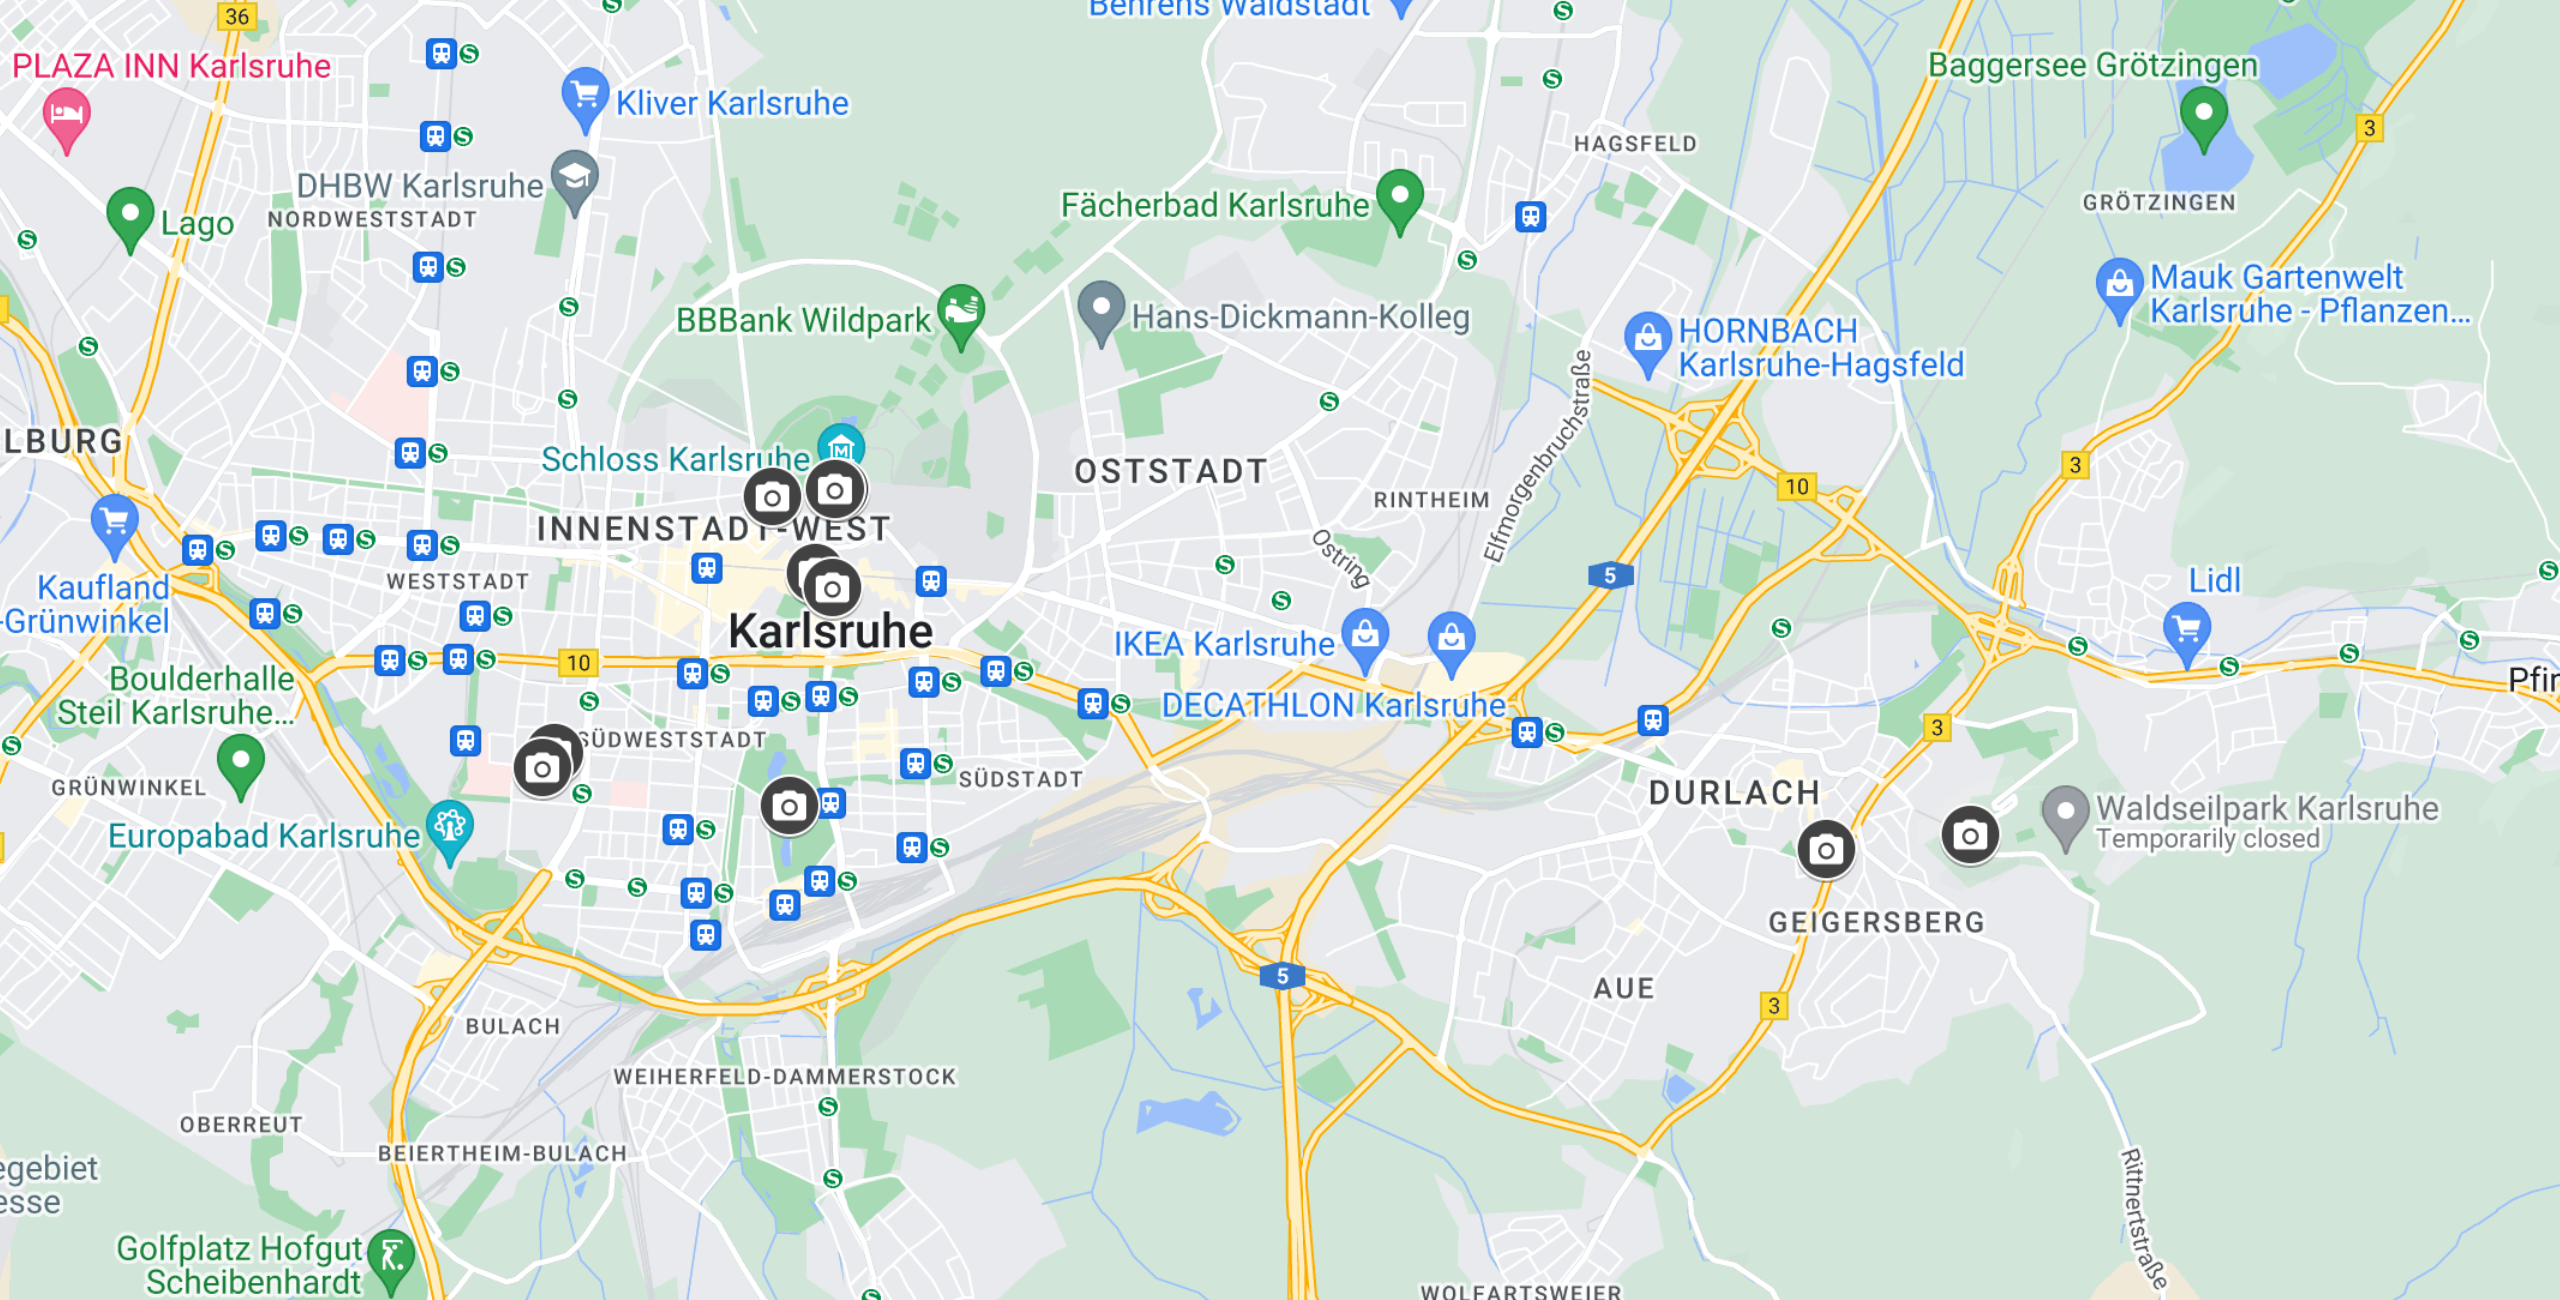 Google Maps Karlsruhe, Germany